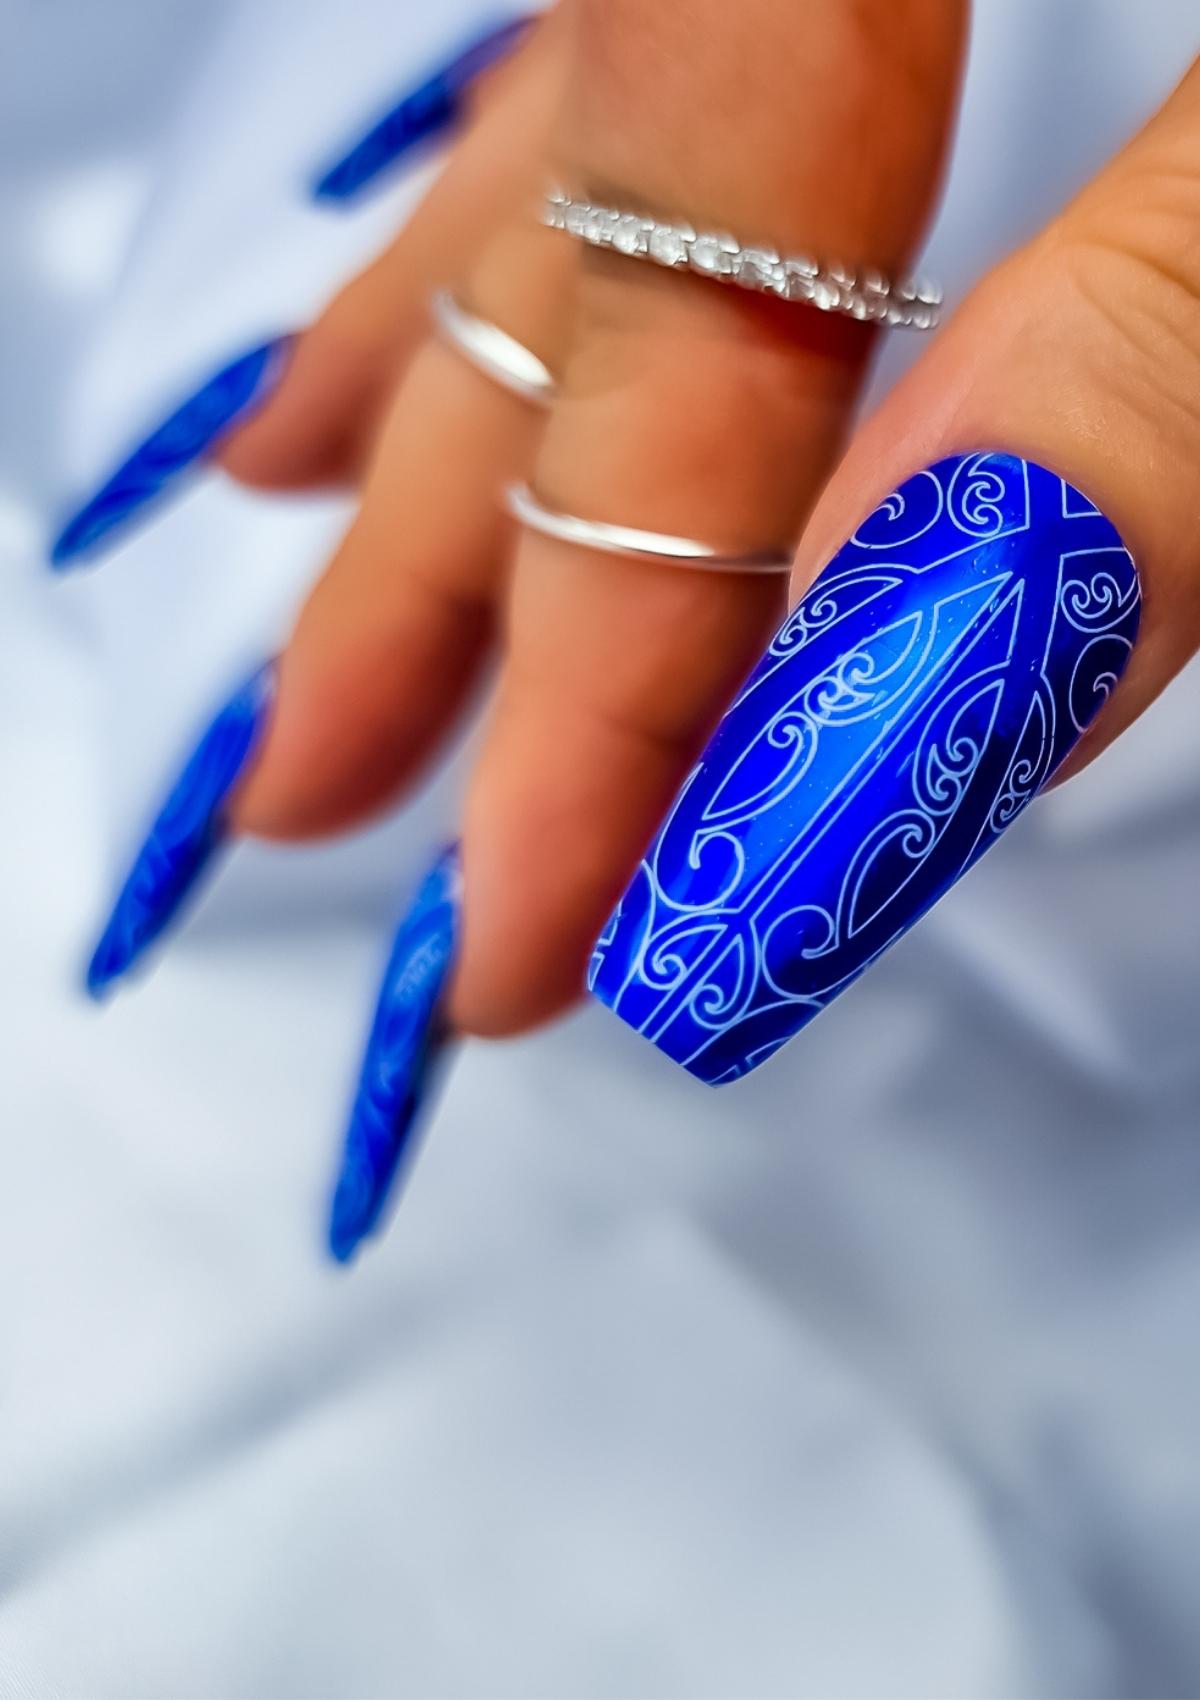 Dark blue nails with white Maori designs 